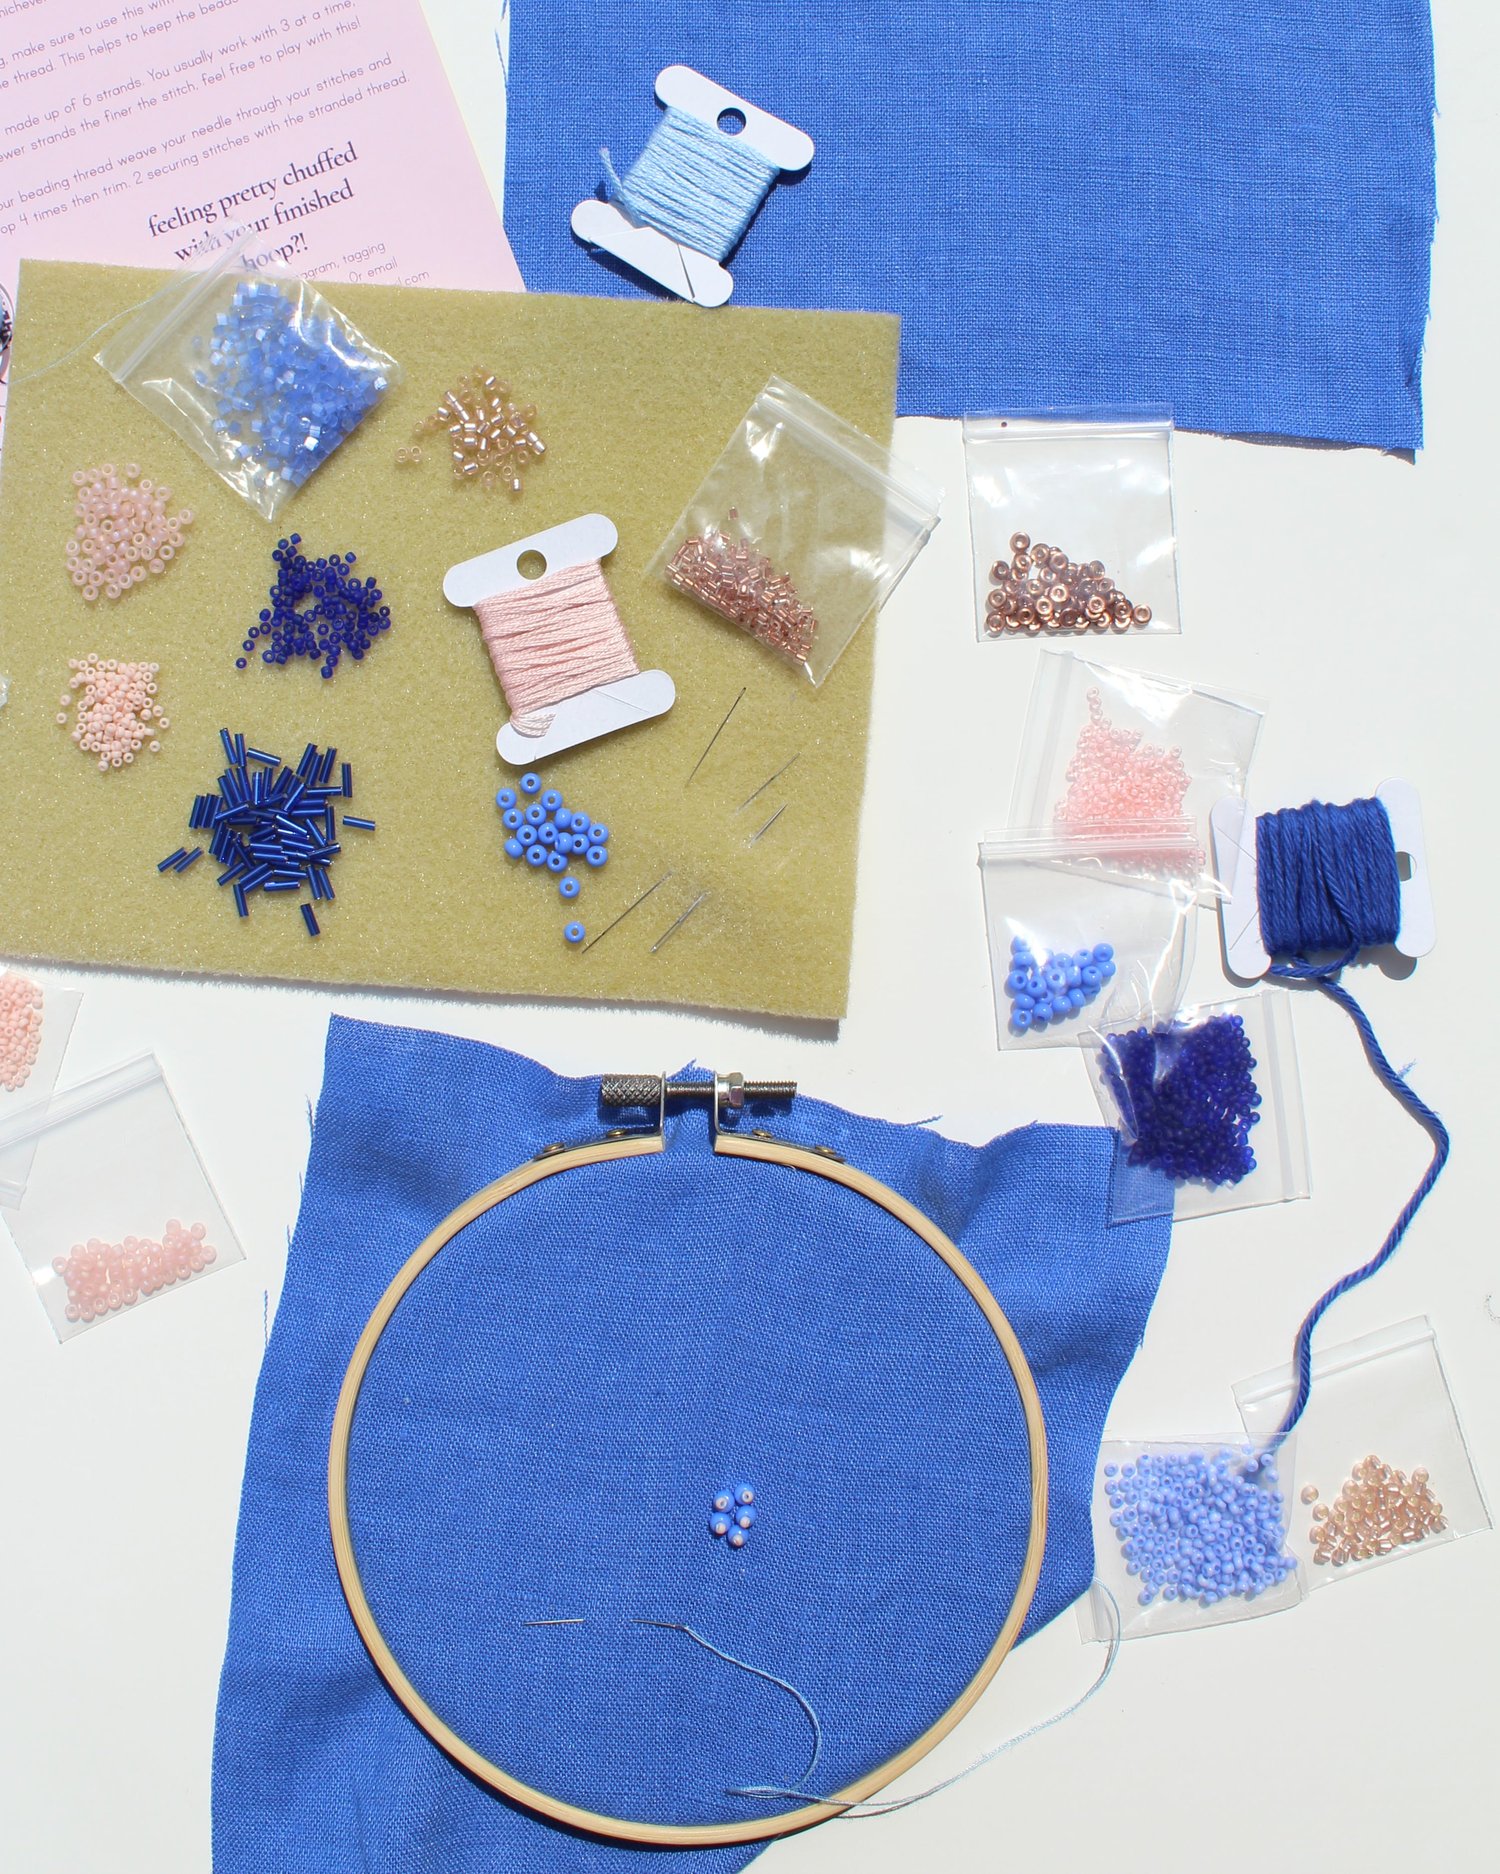 Beaded Embroidery Kit in Blue — imogen melissa